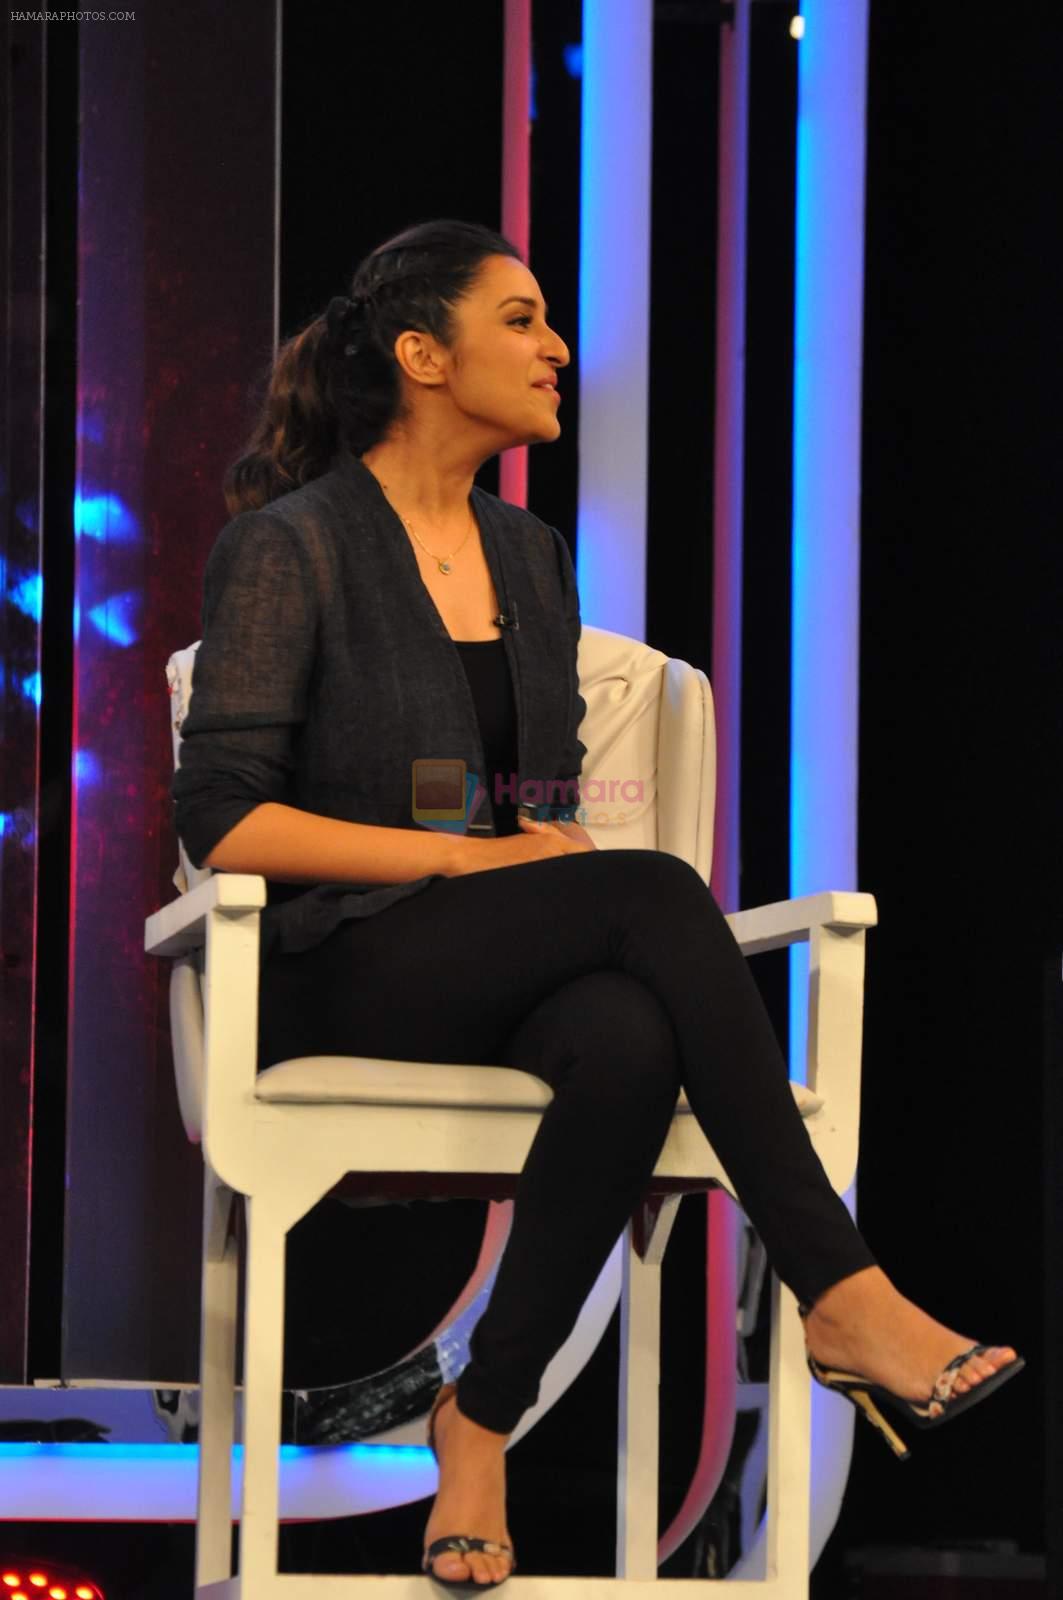 Parineeti Chopra at NDTV Cleanathon on 17th Jan 2016